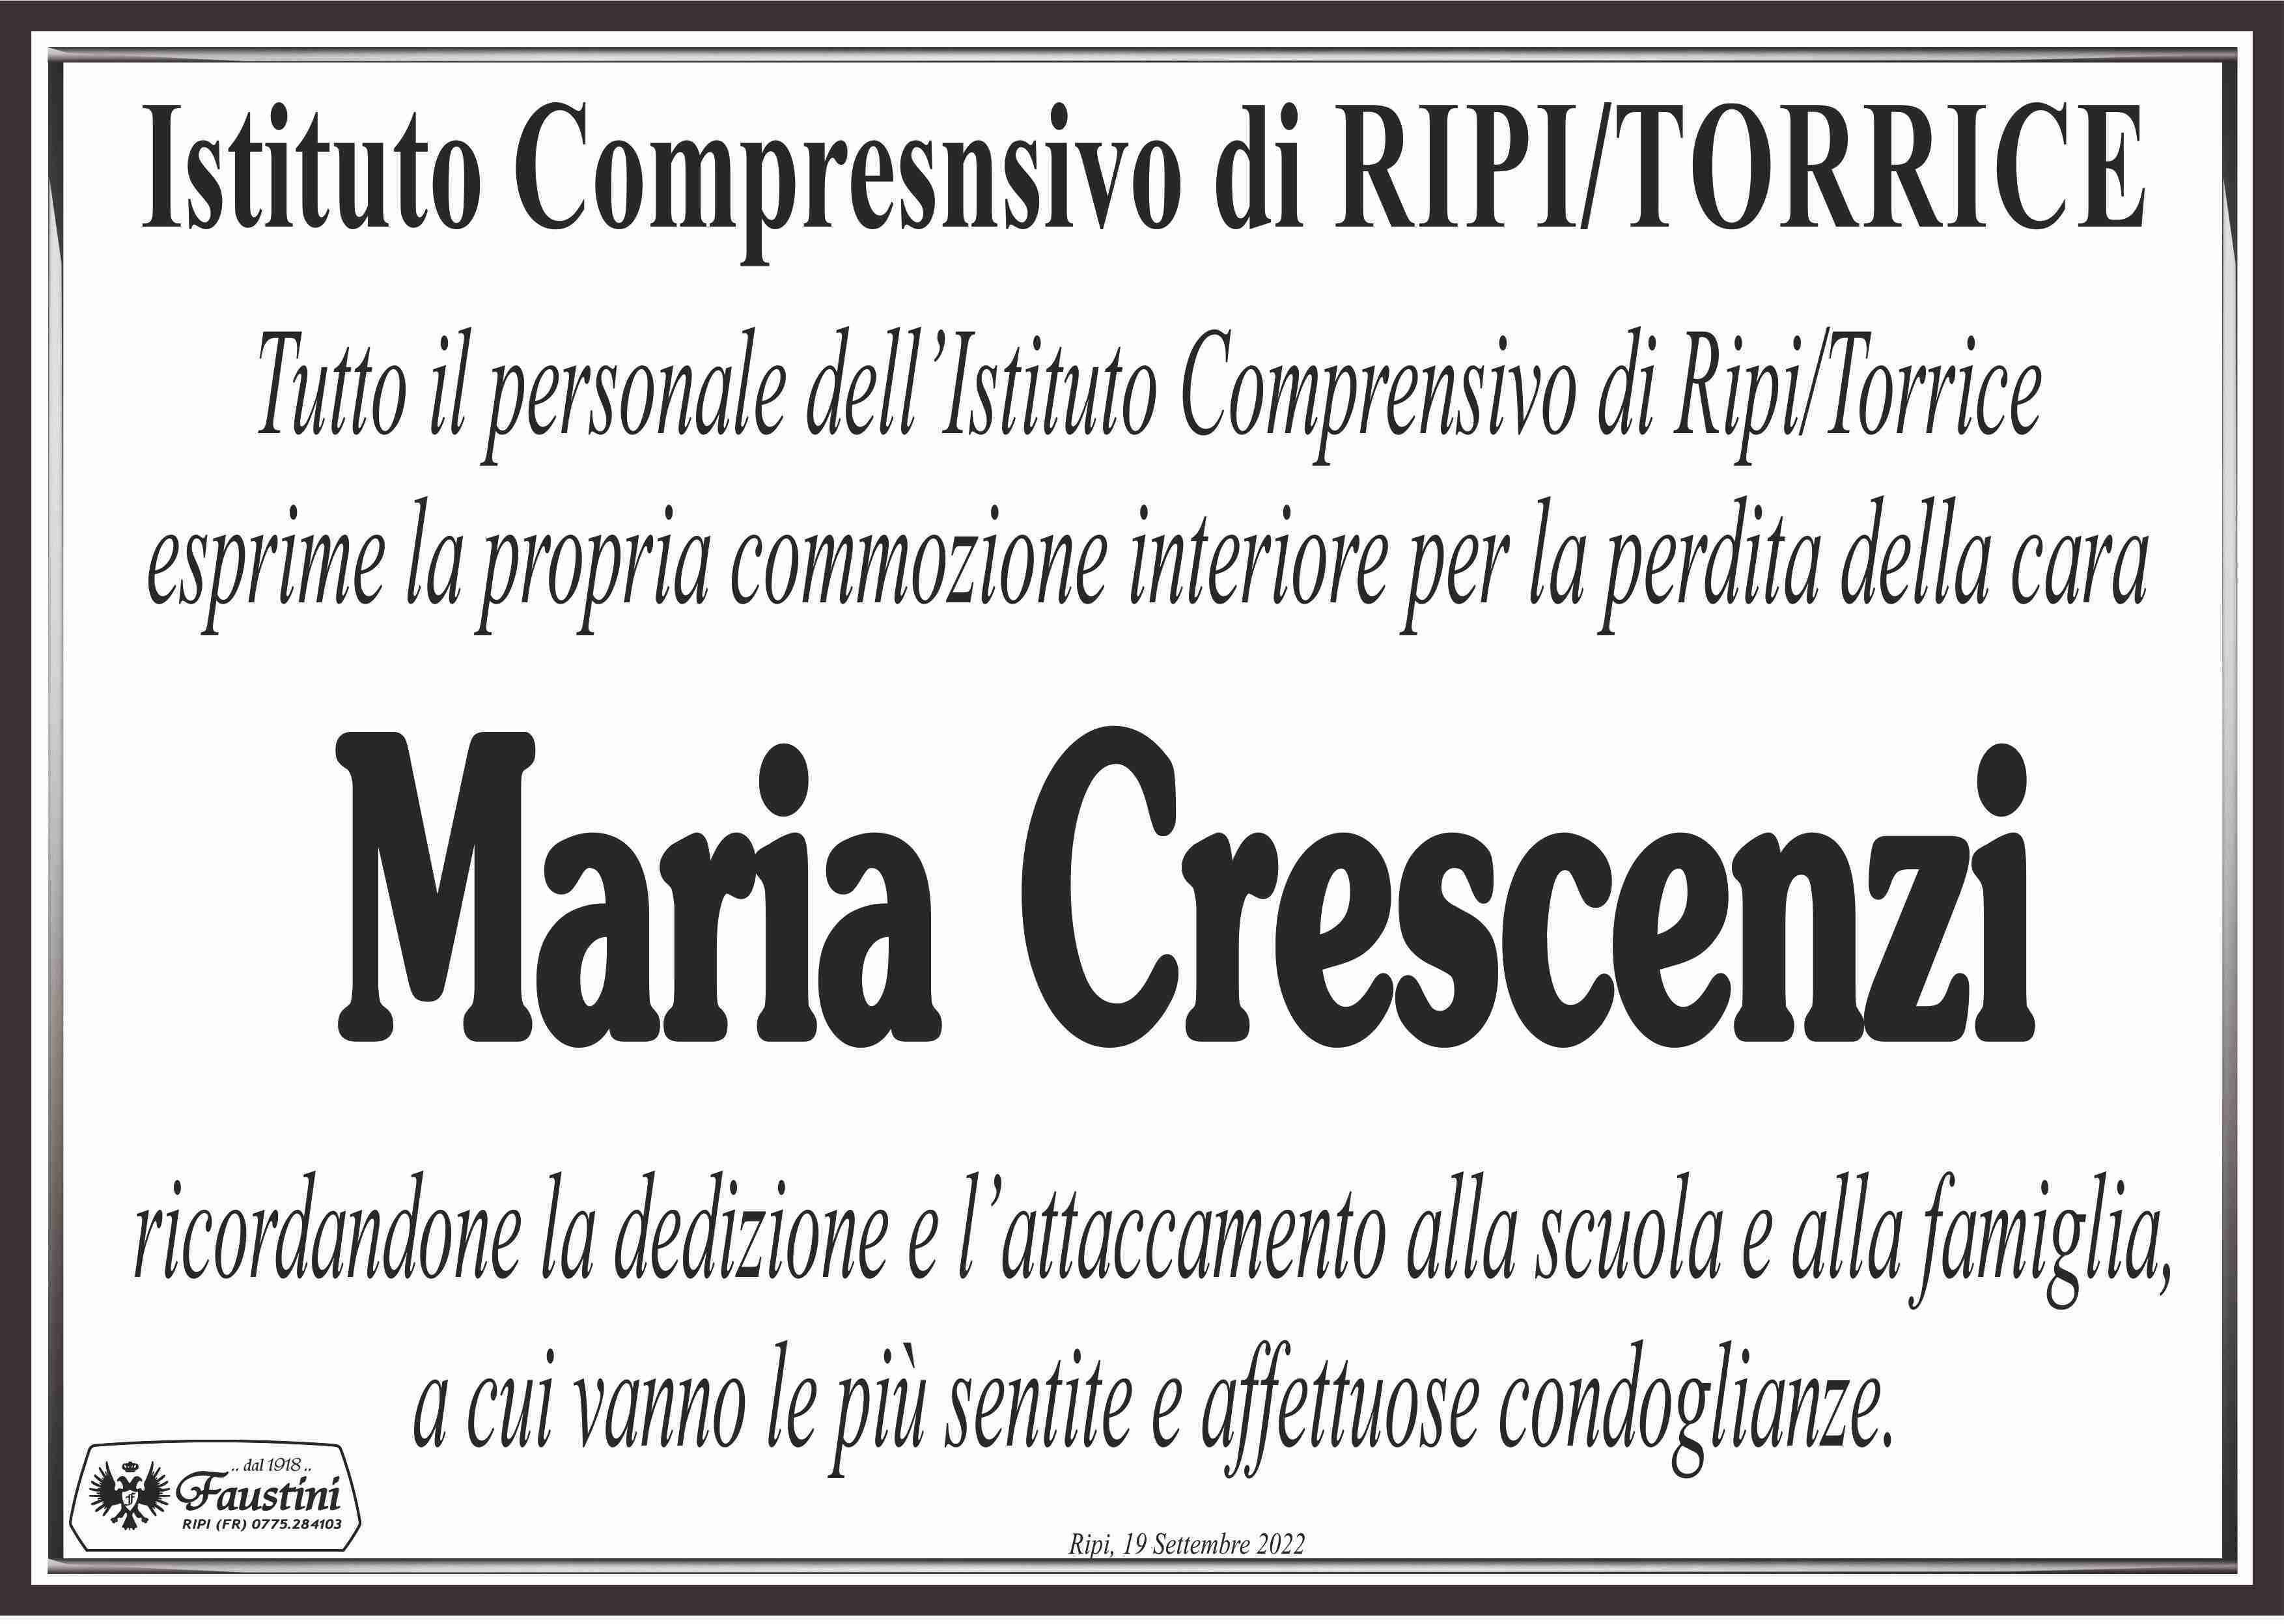 Maria Crescenzi